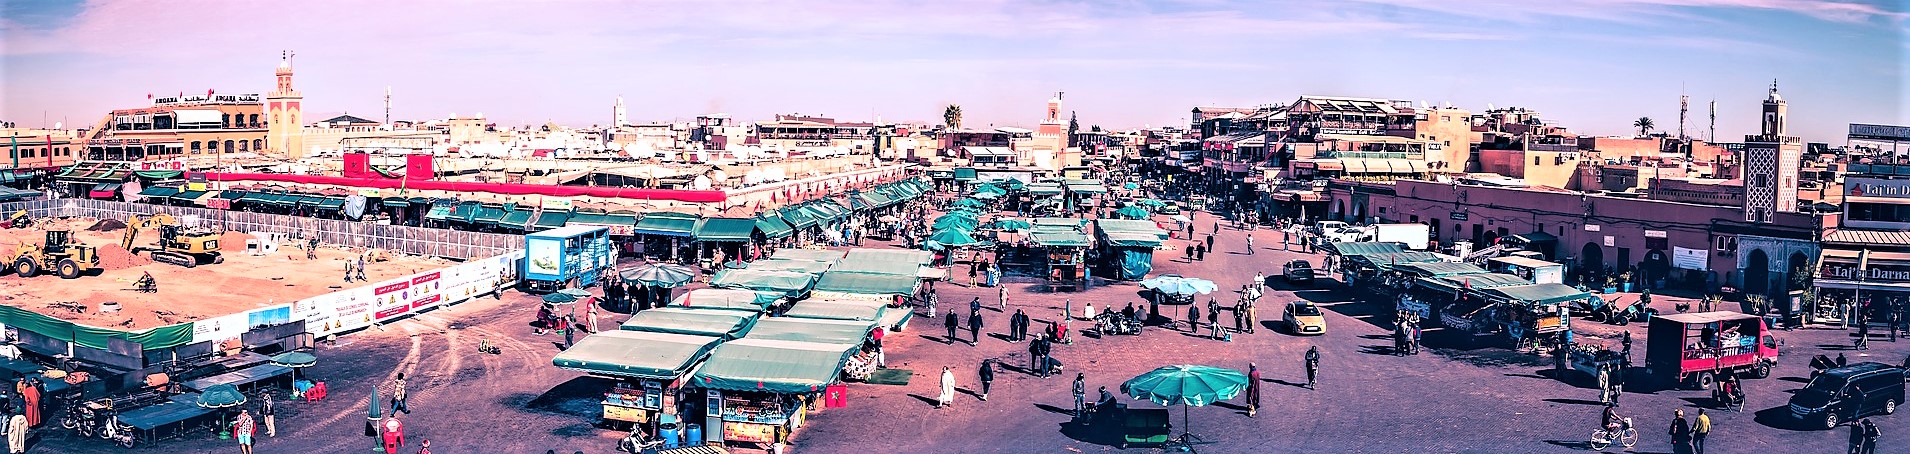 Marrakech SPOT|マラケシュ 観光スポット